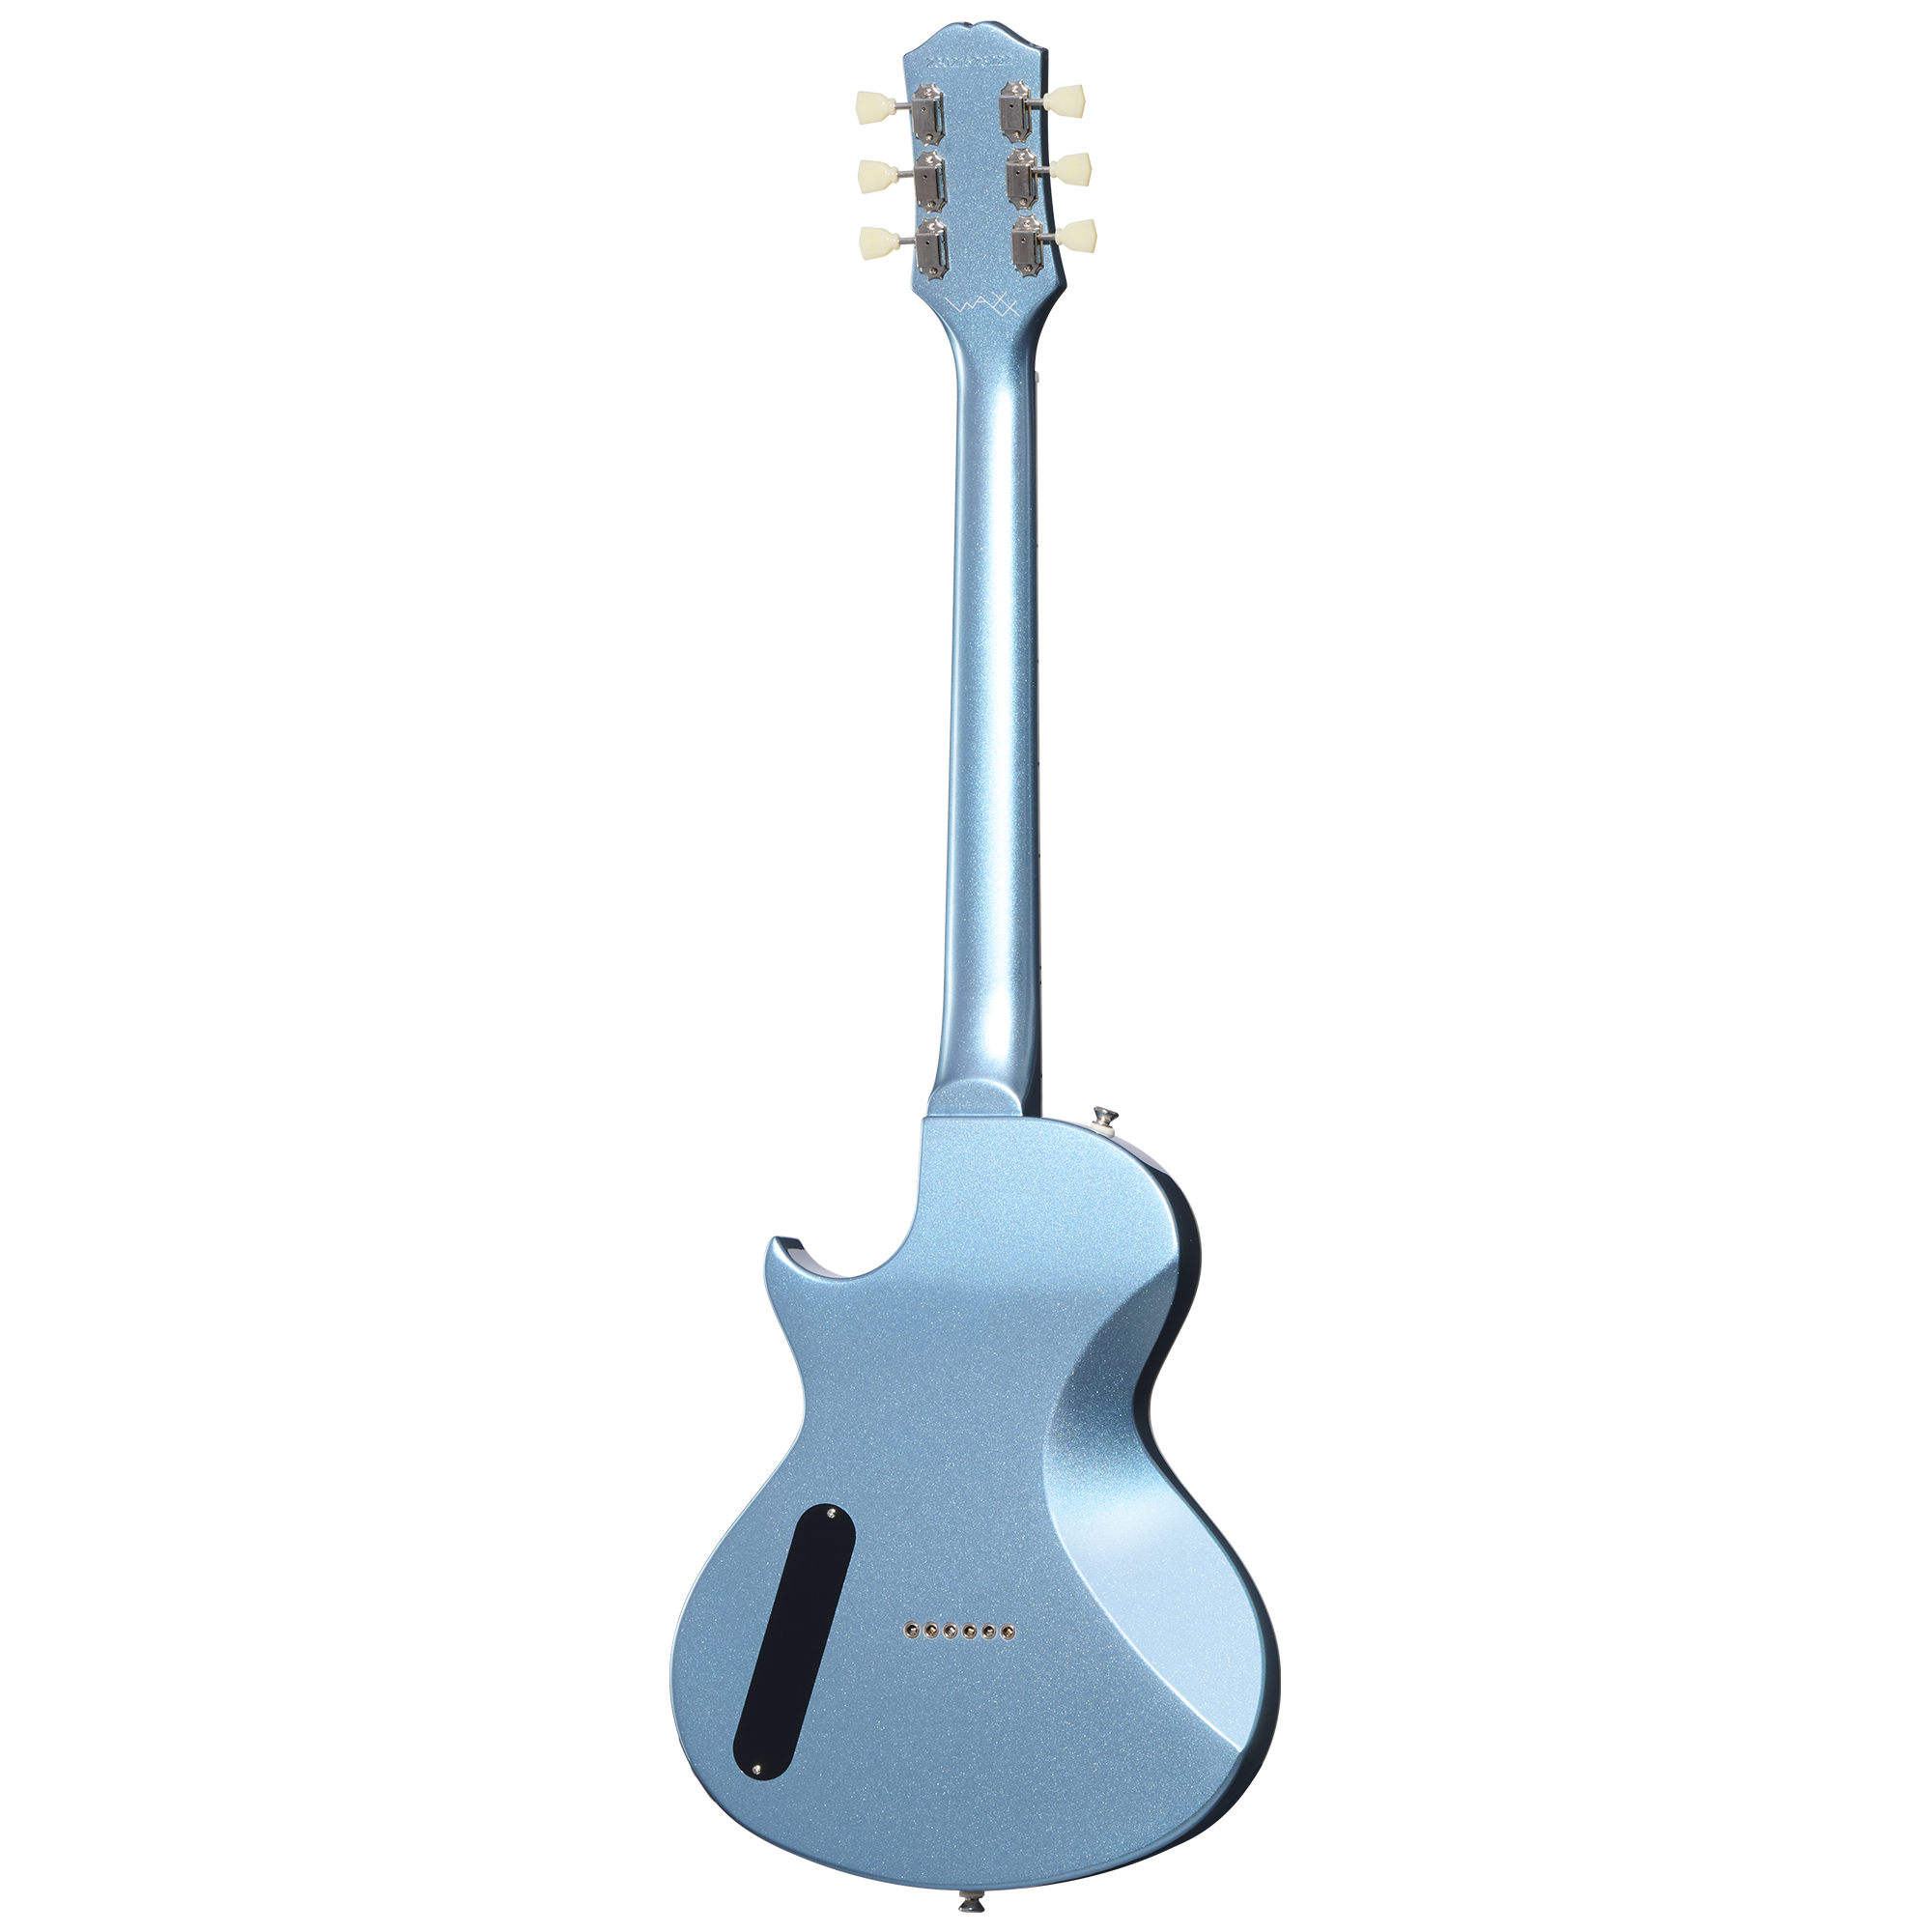 Epiphone Nighthawk Studio Waxx Hh Ht Lau - Pelham Blue - Single cut electric guitar - Variation 1